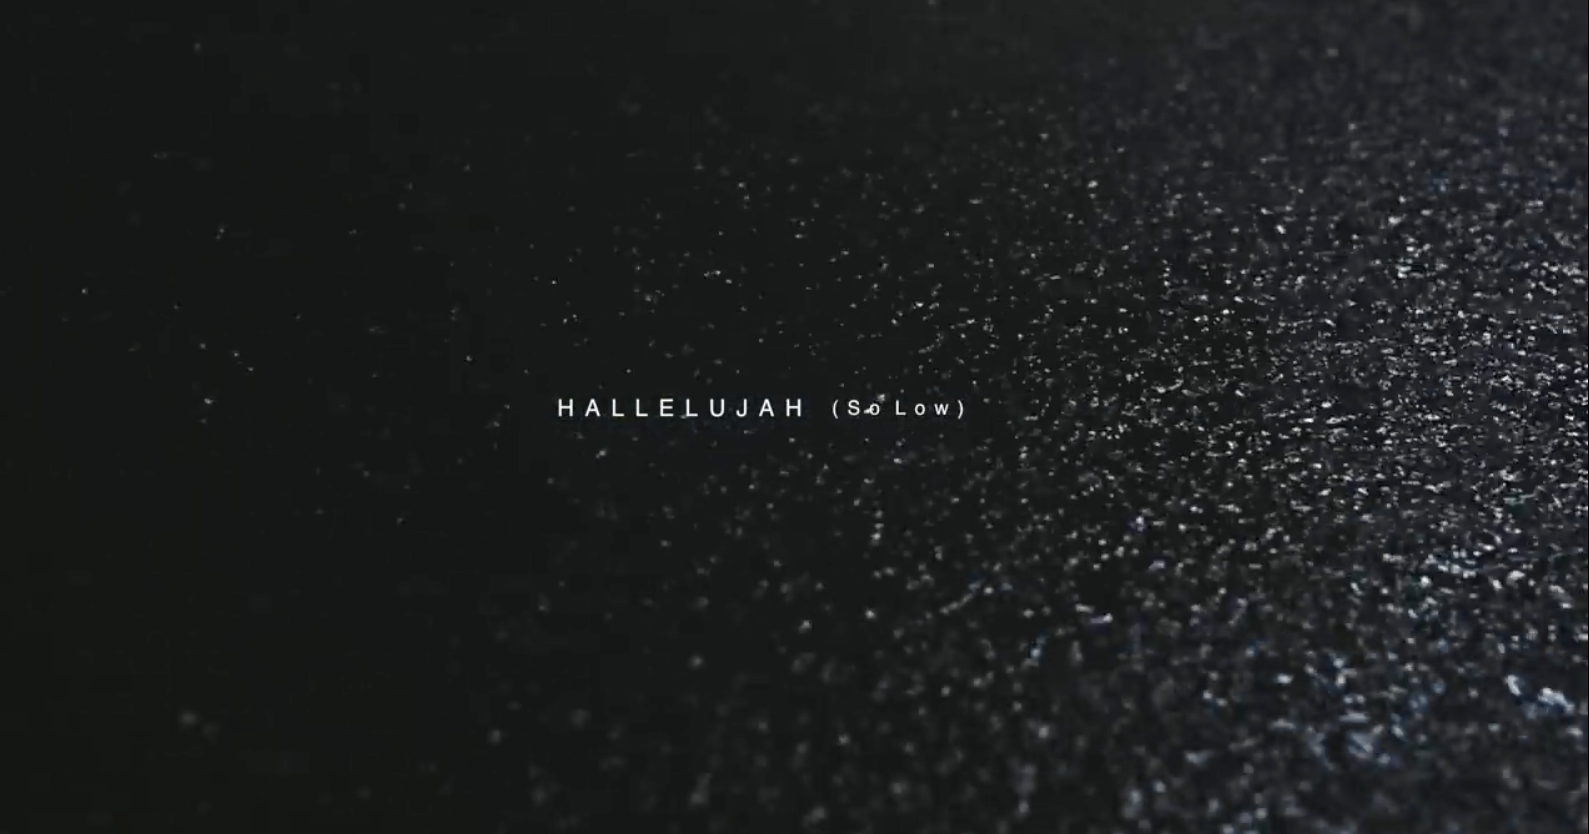 WATCH: Hallelujah (So Low) by Editors